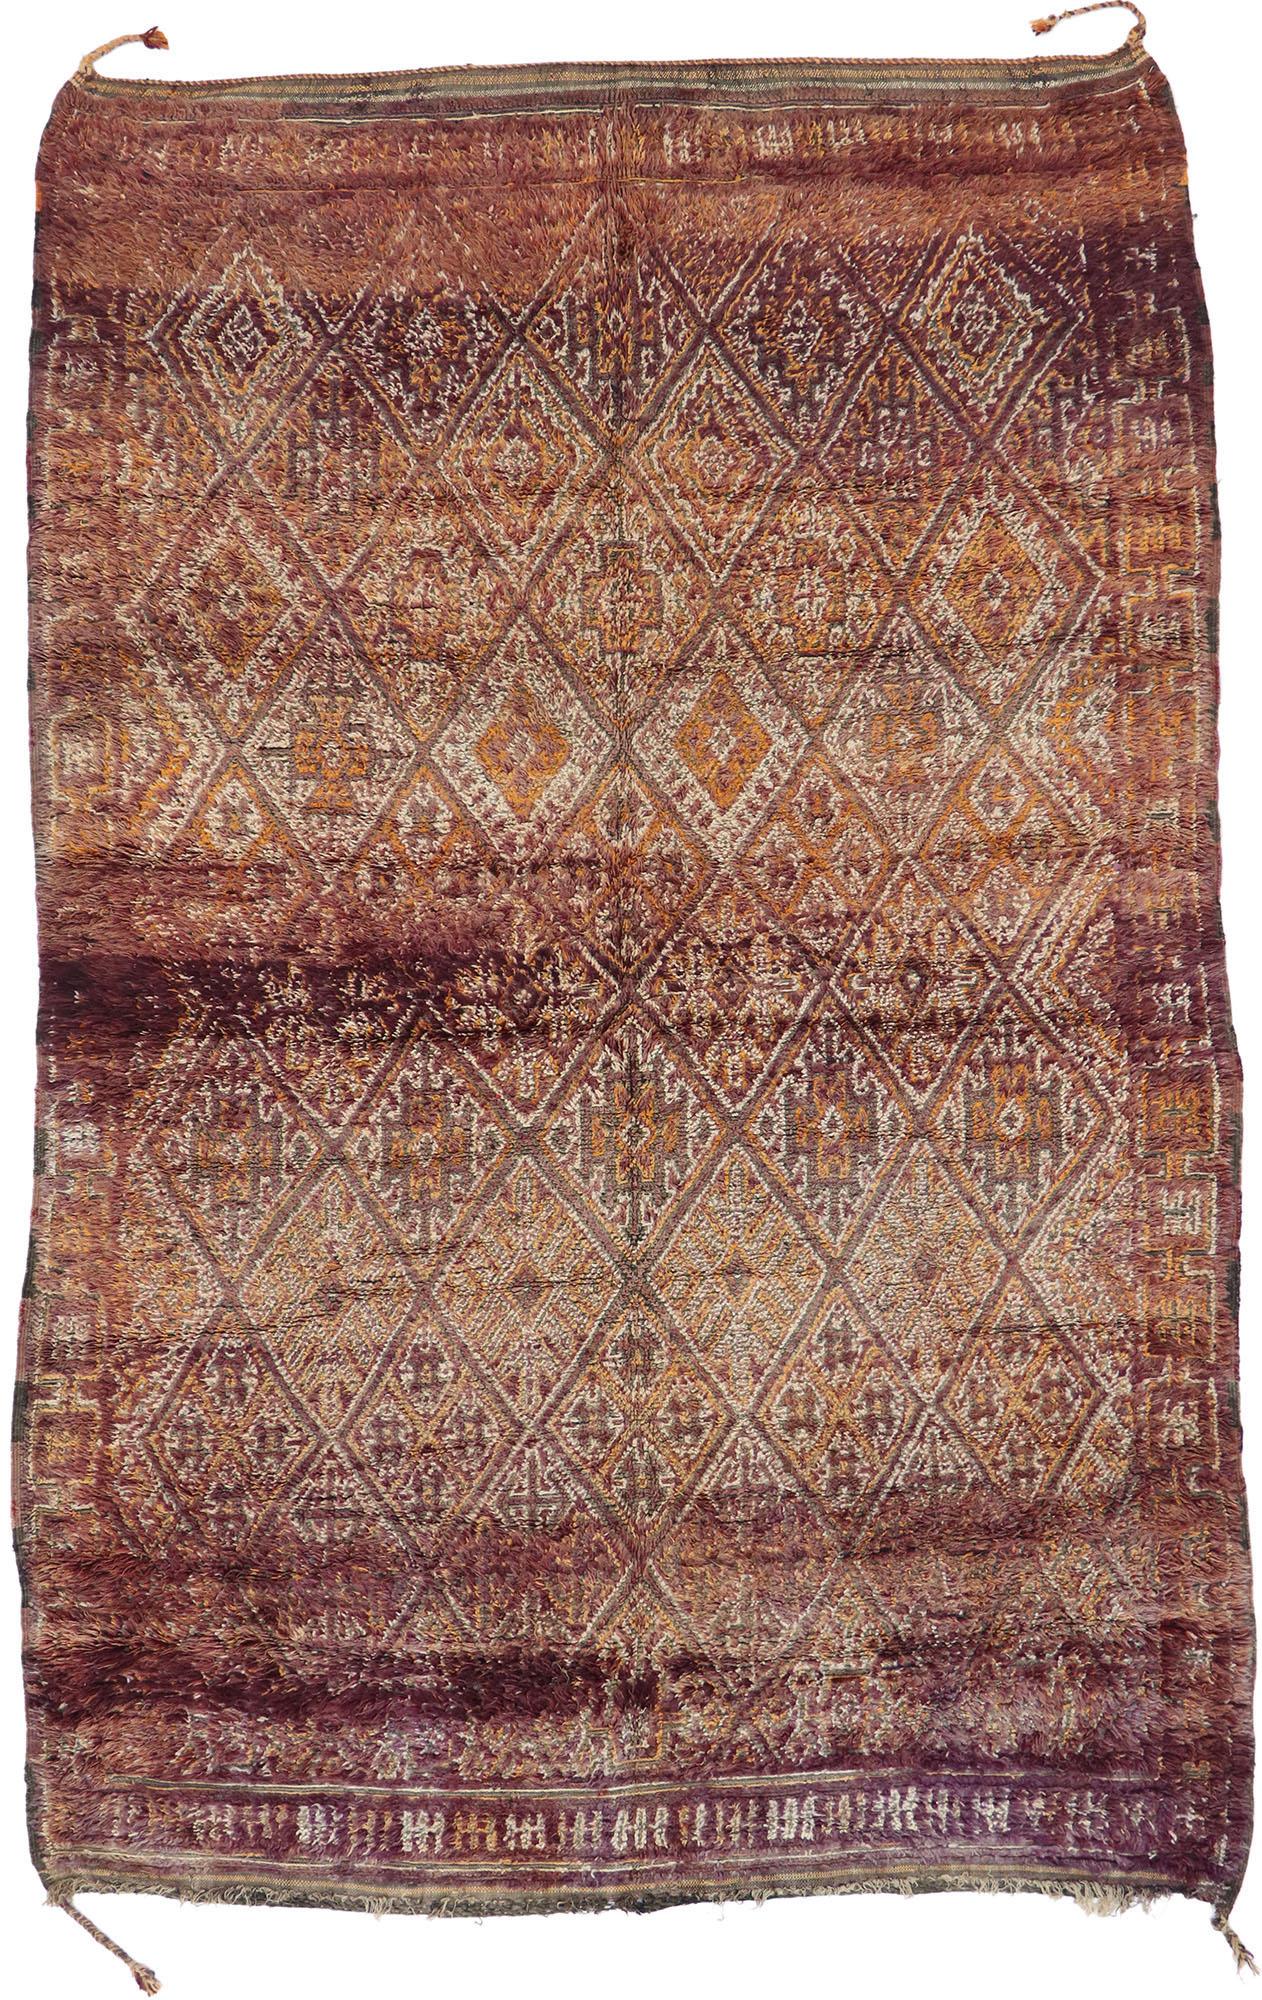 Vintage Beni MGuild Moroccan Rug, Midcentury Meets Autumn Harvest 1